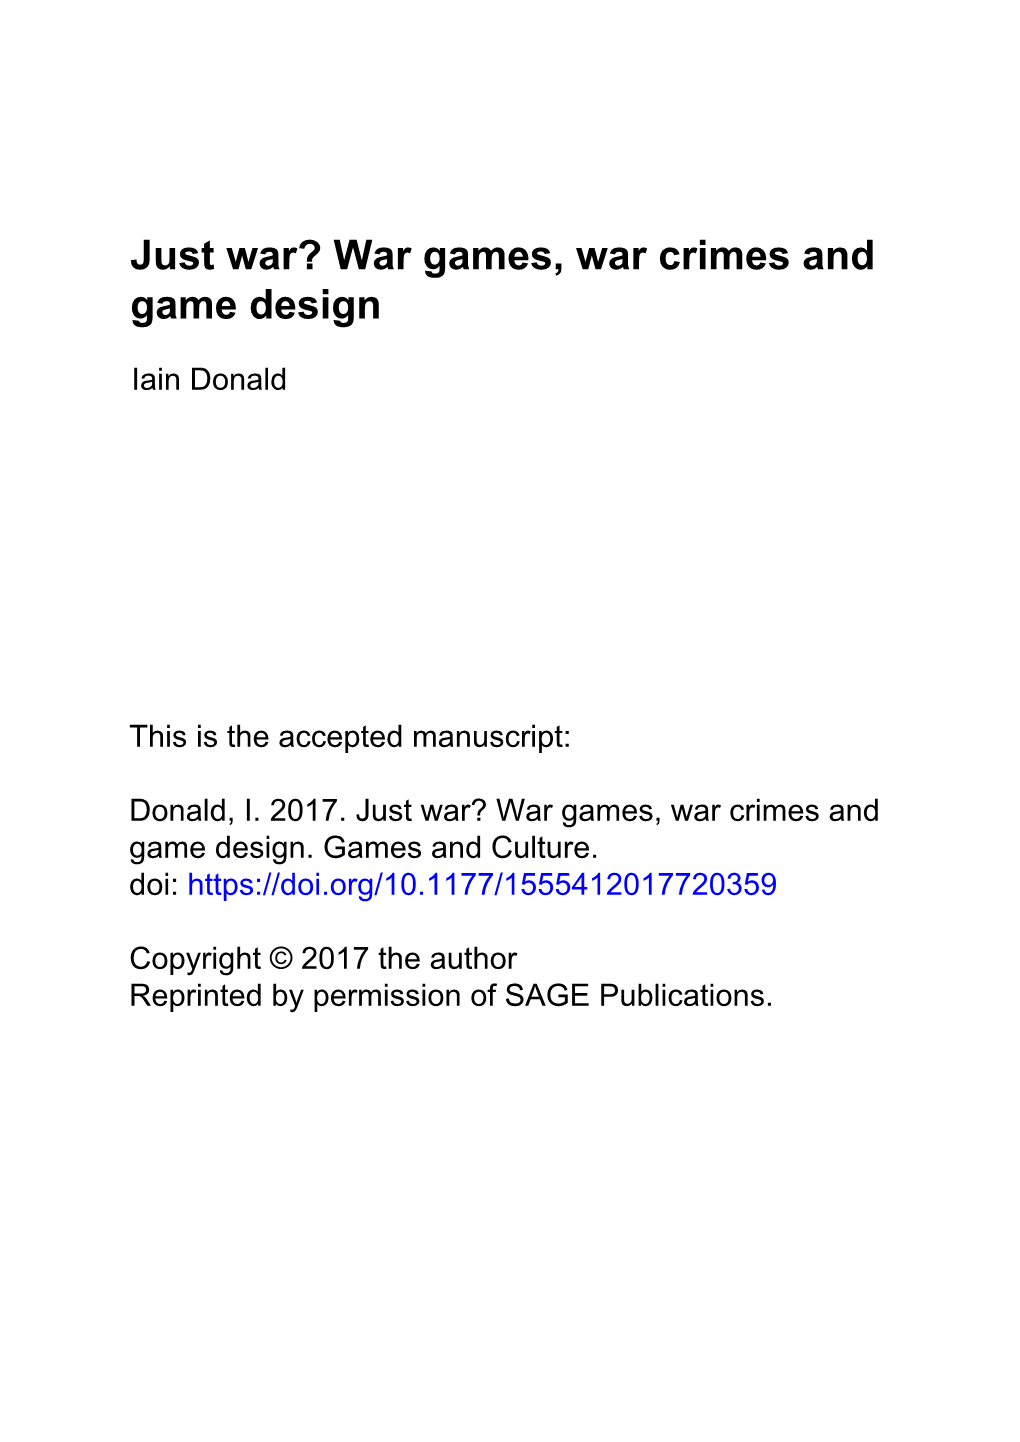 Just War? War Games, War Crimes and Game Design